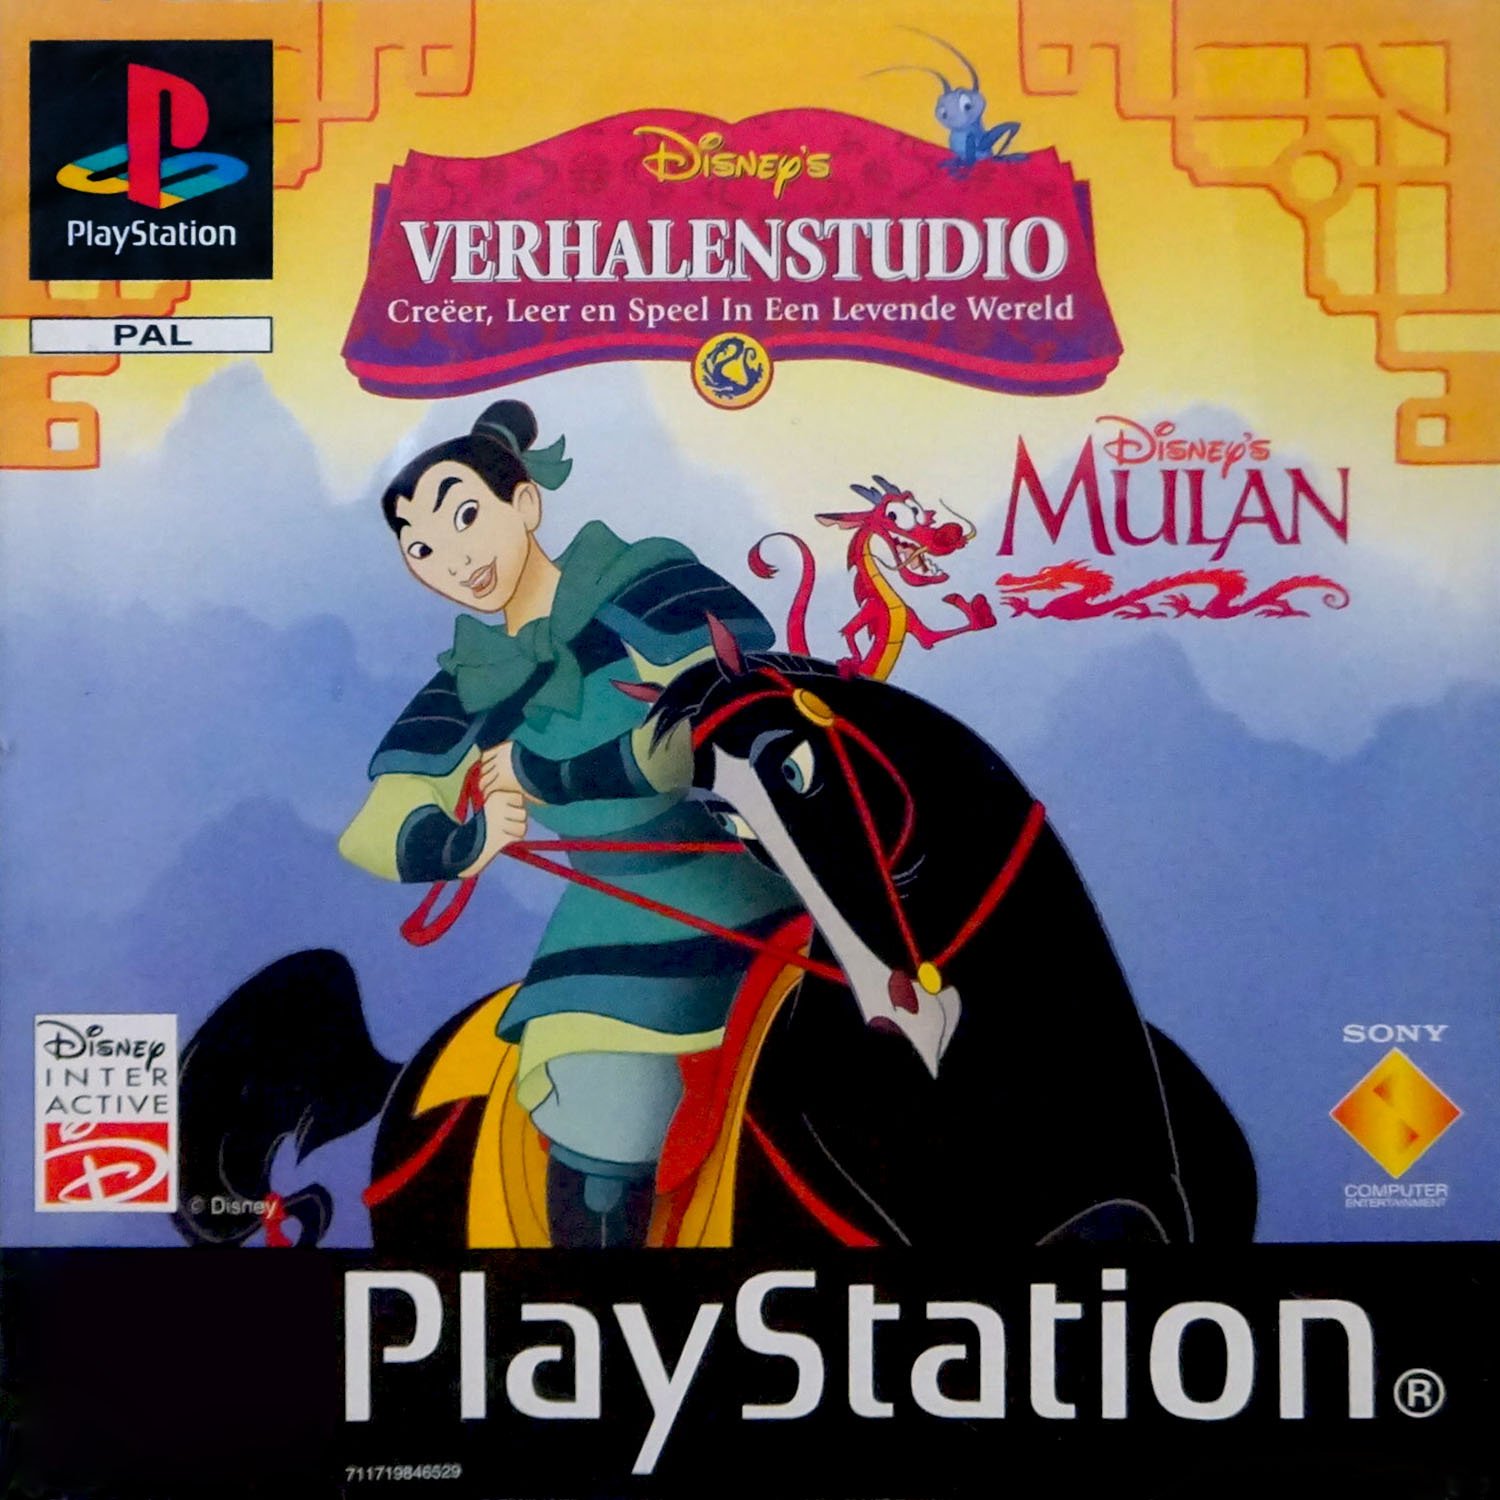 Disney's Verhalenstudio: Mulan